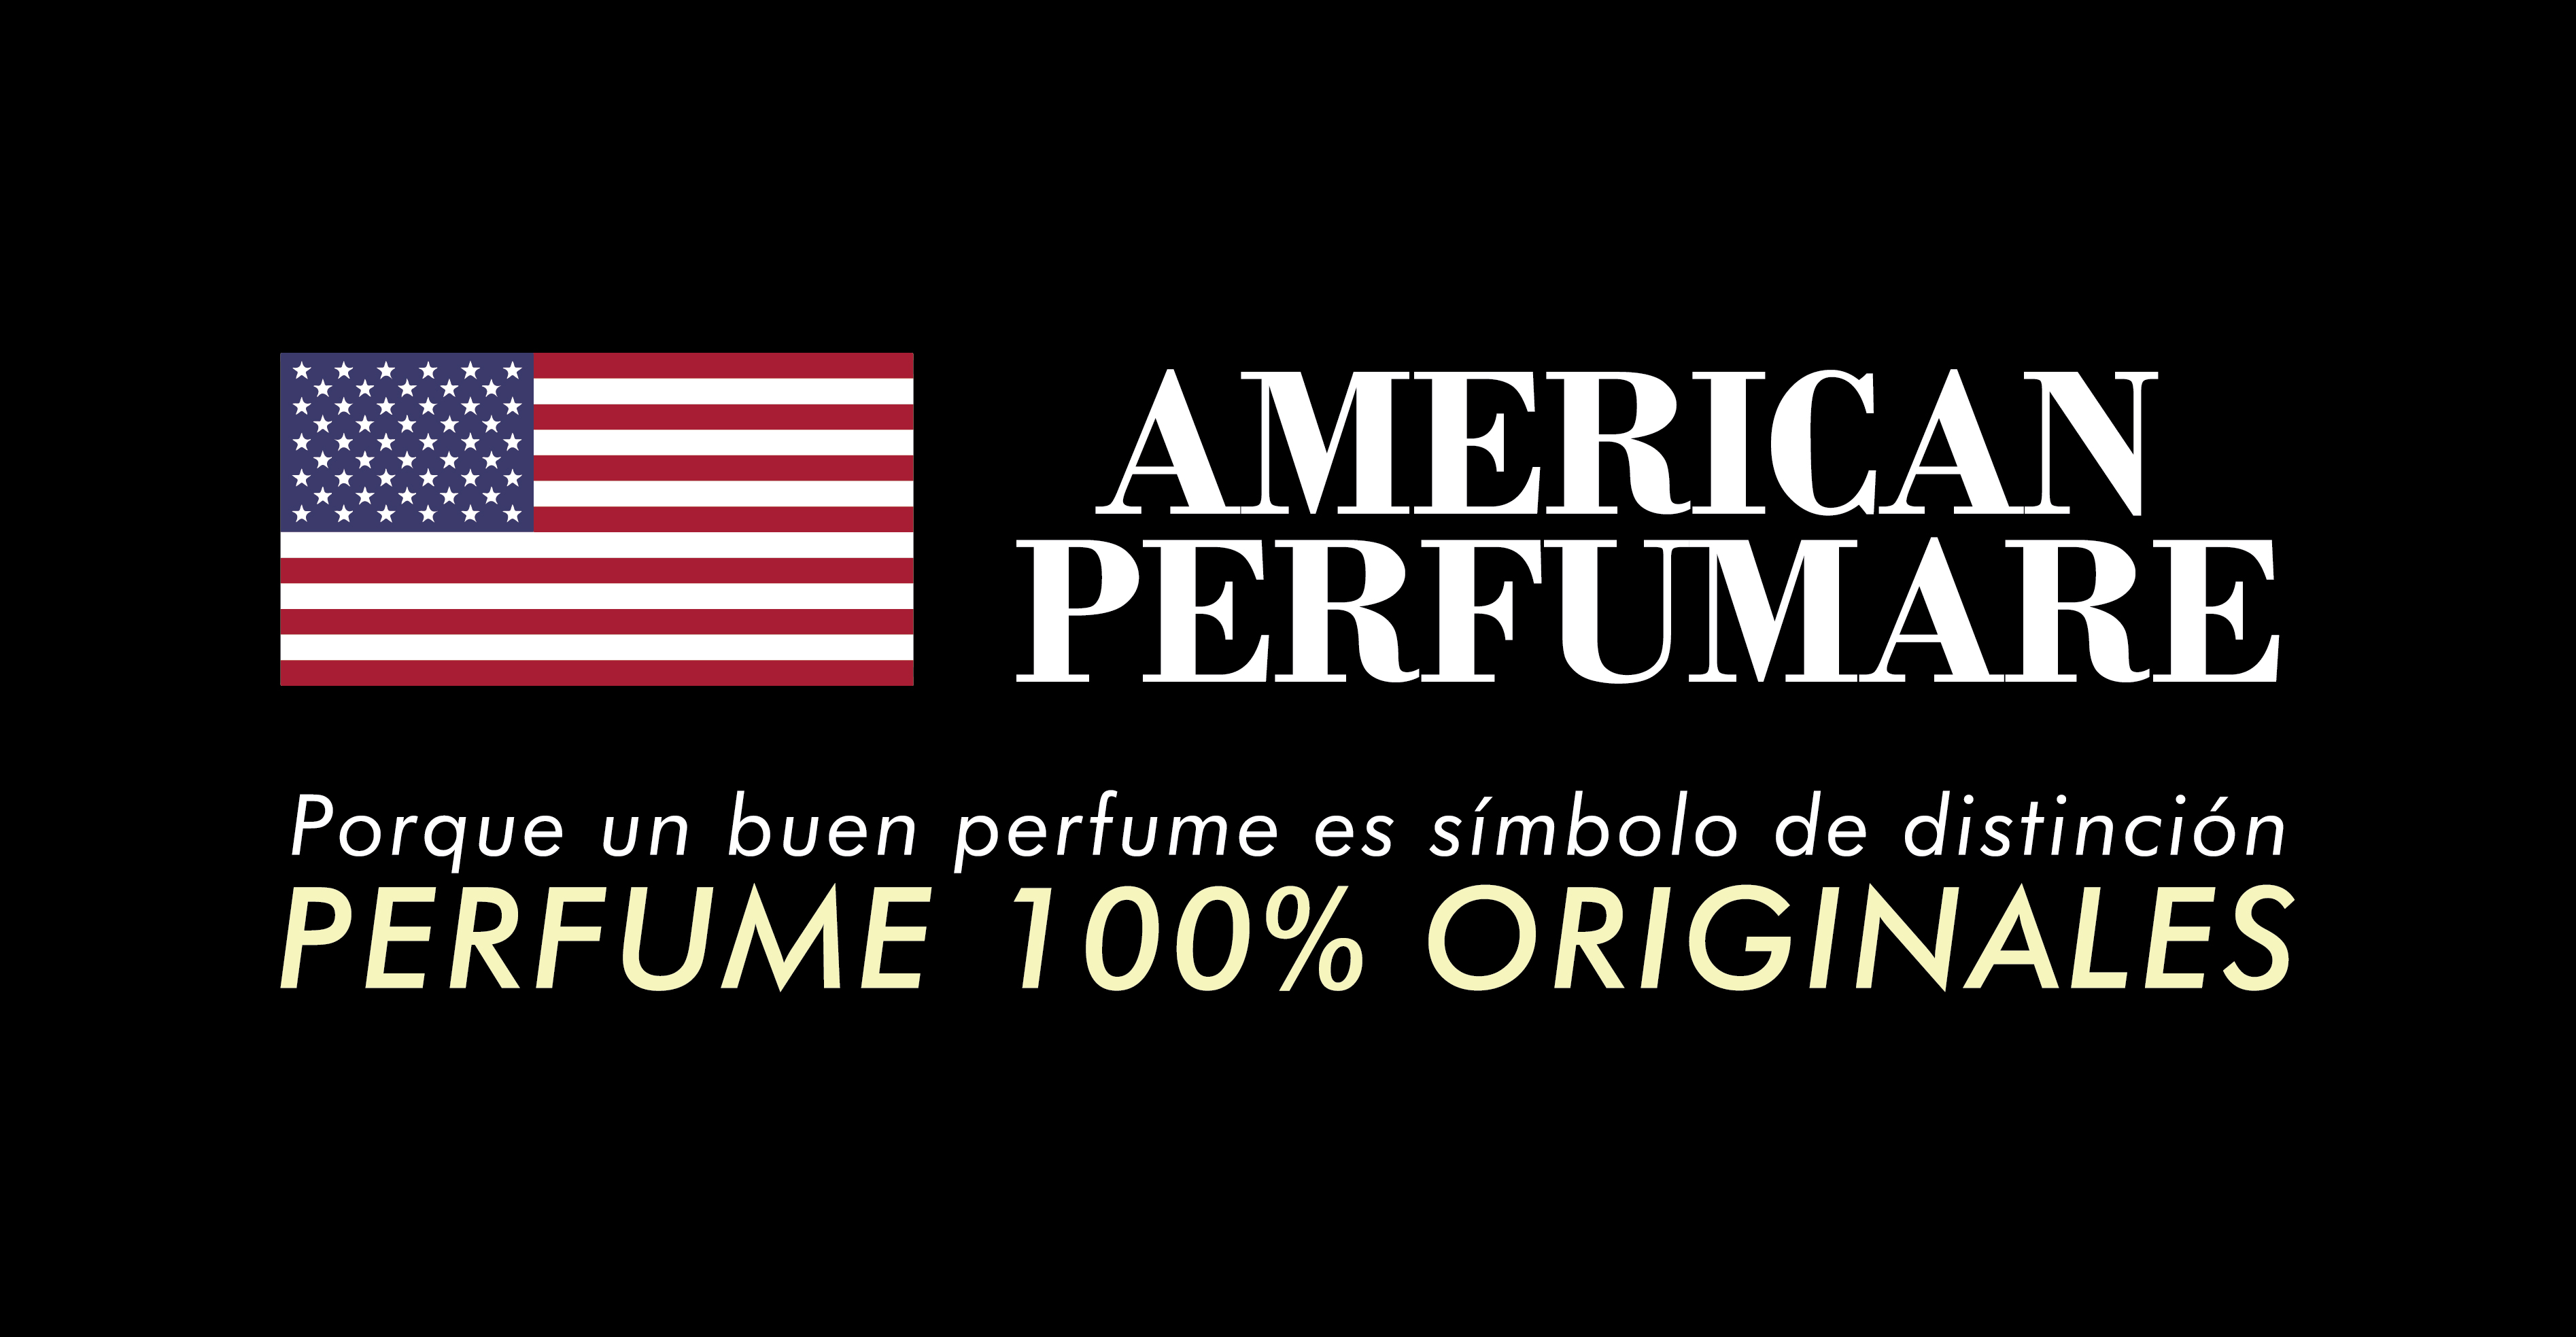 Americanperfumare